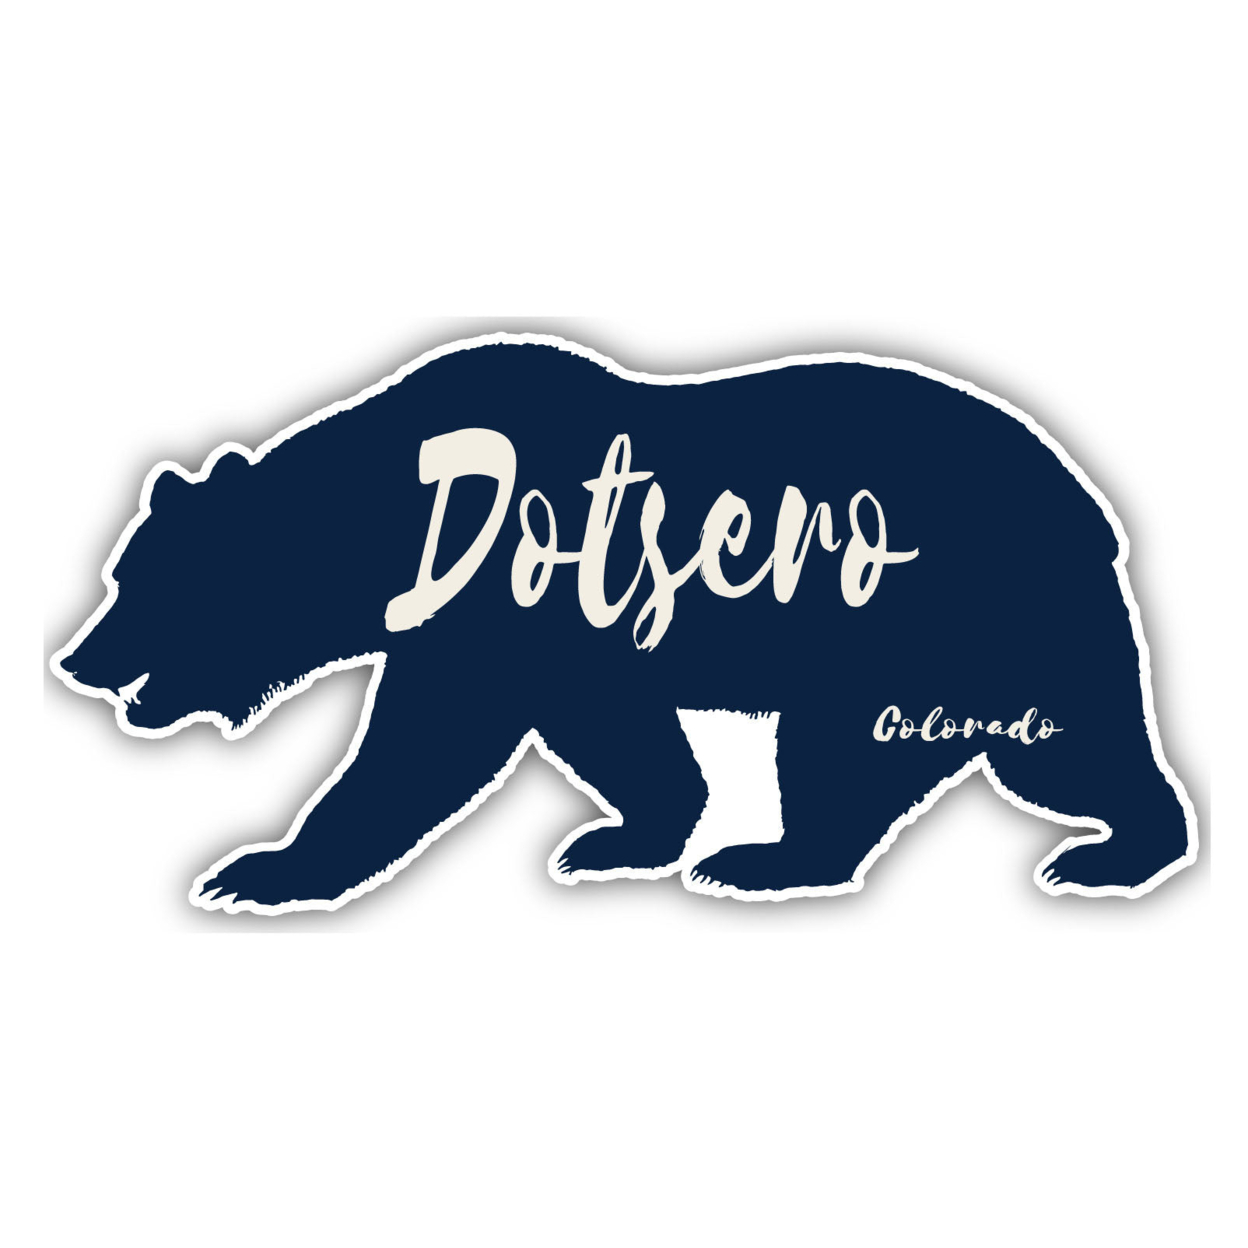 Dotsero Colorado Souvenir Decorative Stickers (Choose Theme And Size) - Single Unit, 8-Inch, Bear